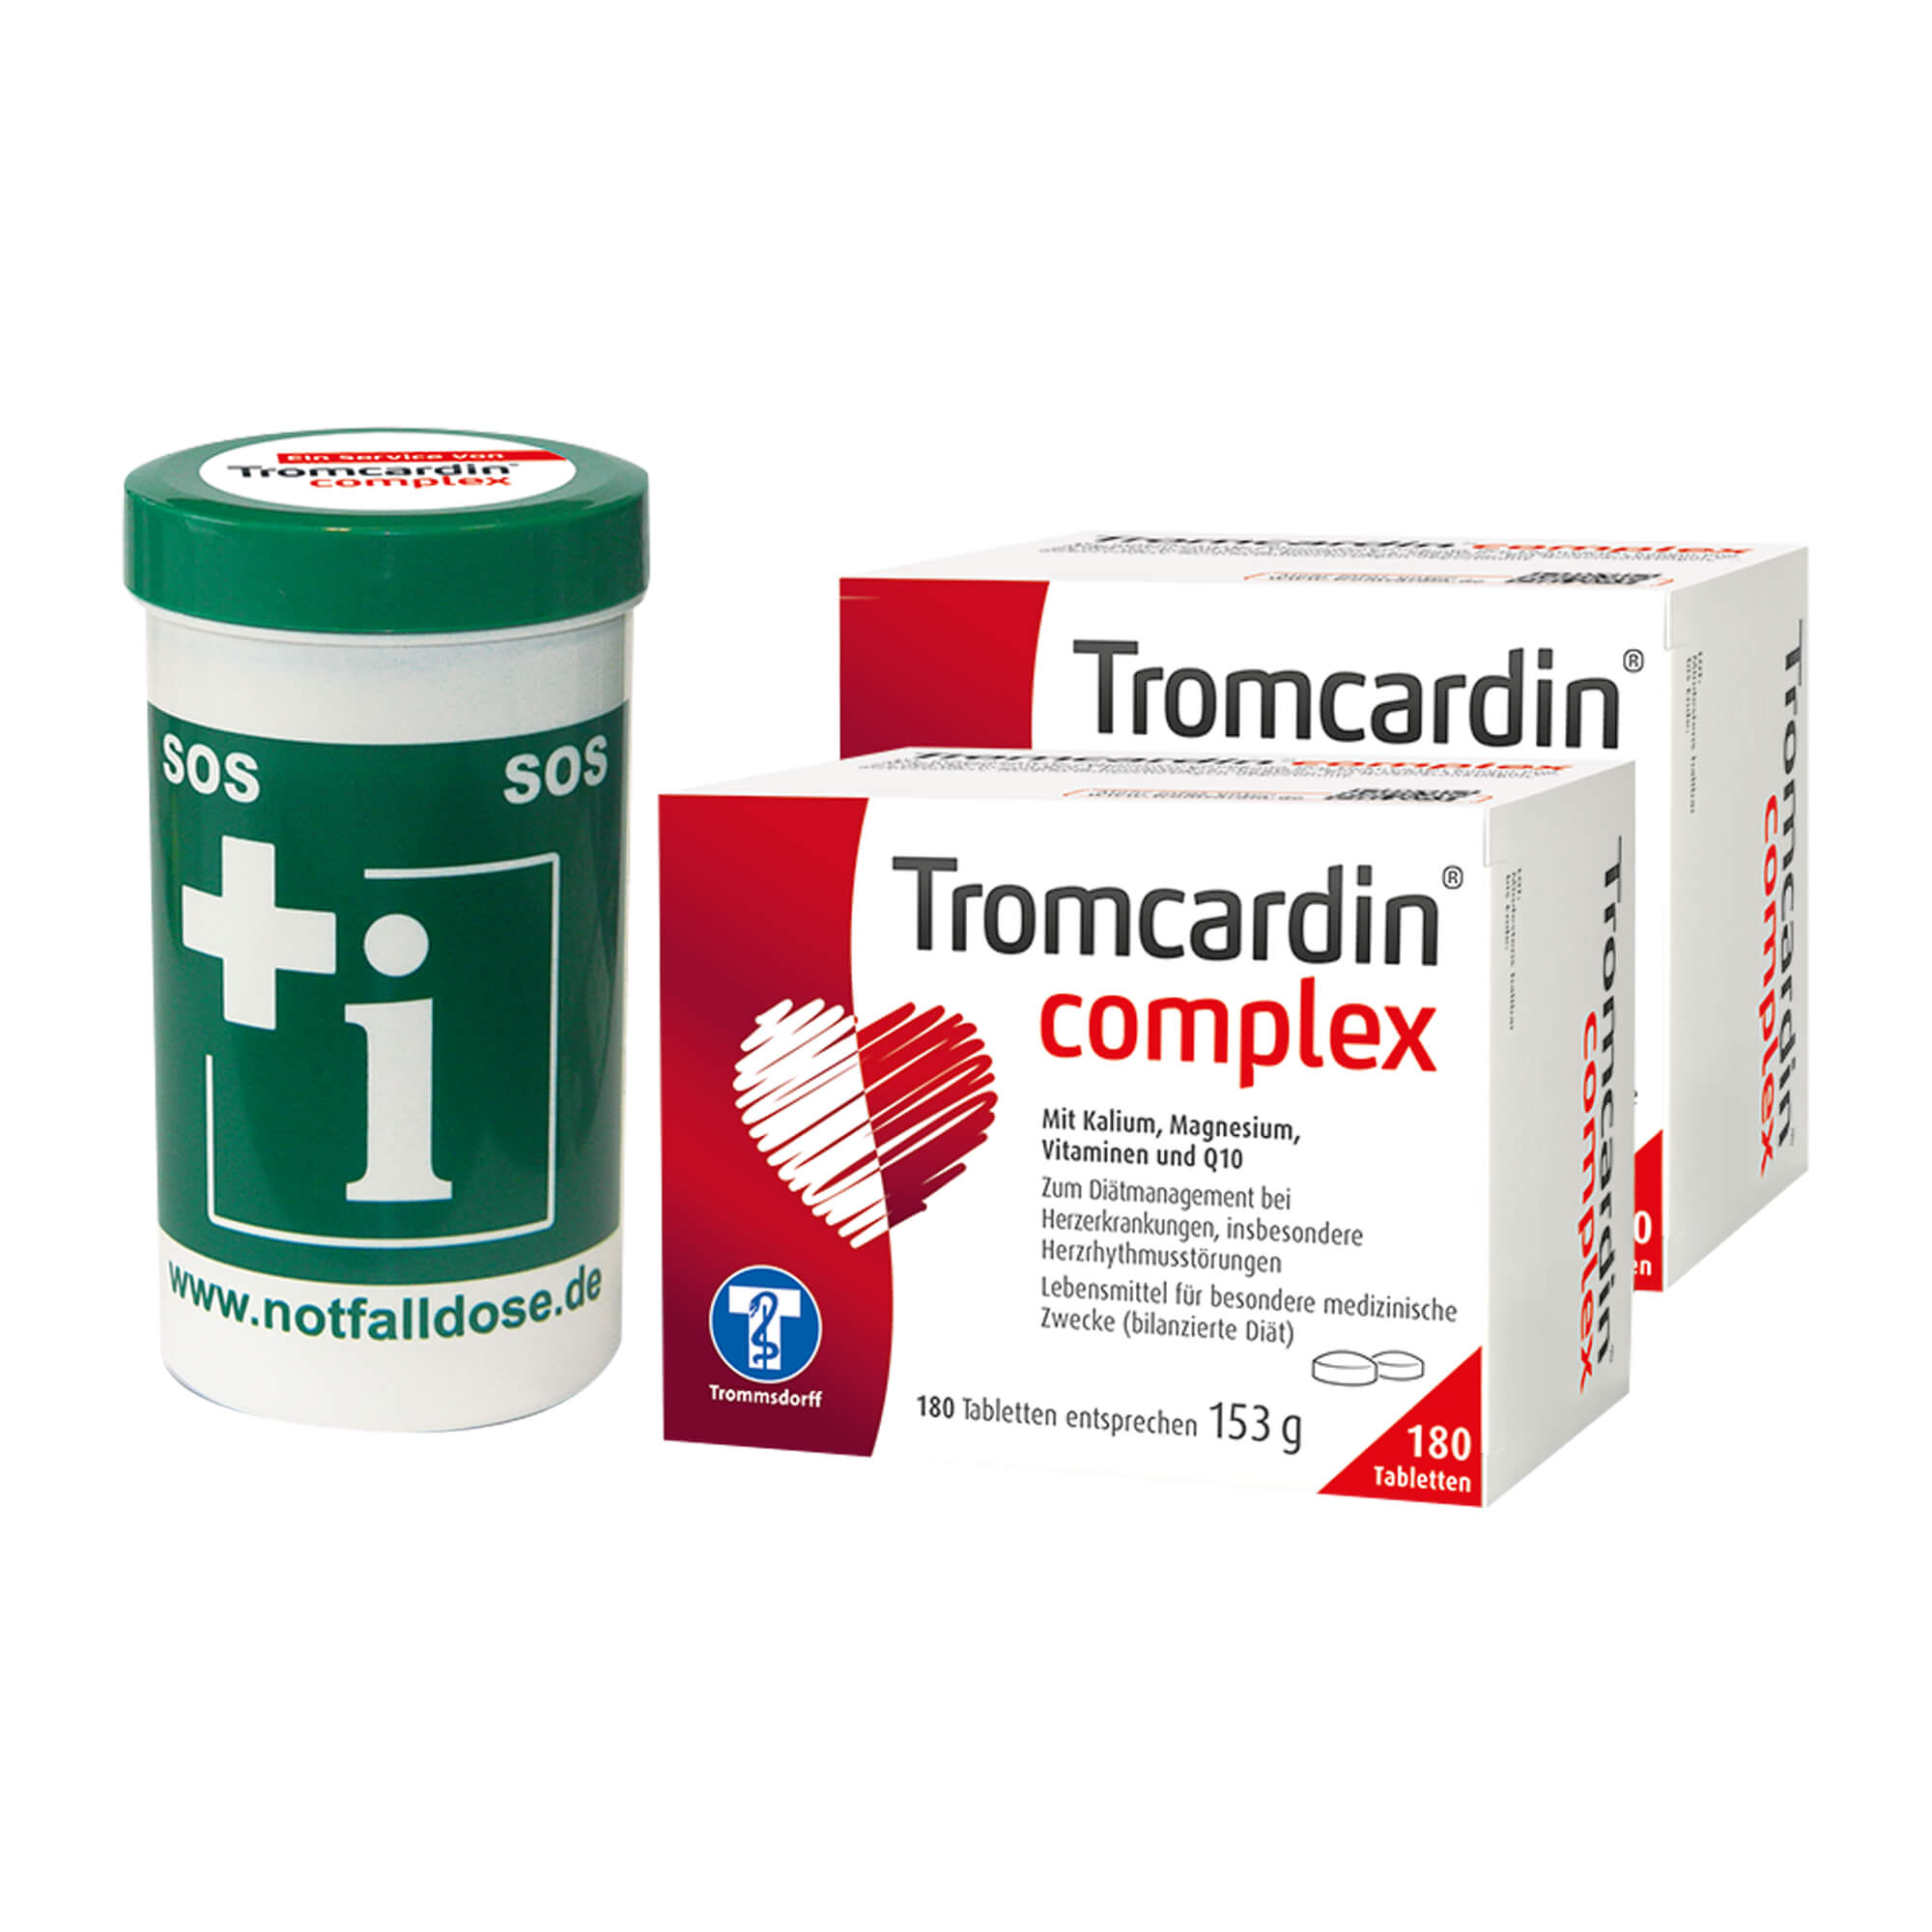 Notfallbox-Set beinhaltet 2x Tromcardin complex Tabletten, 1x Notfalldose.